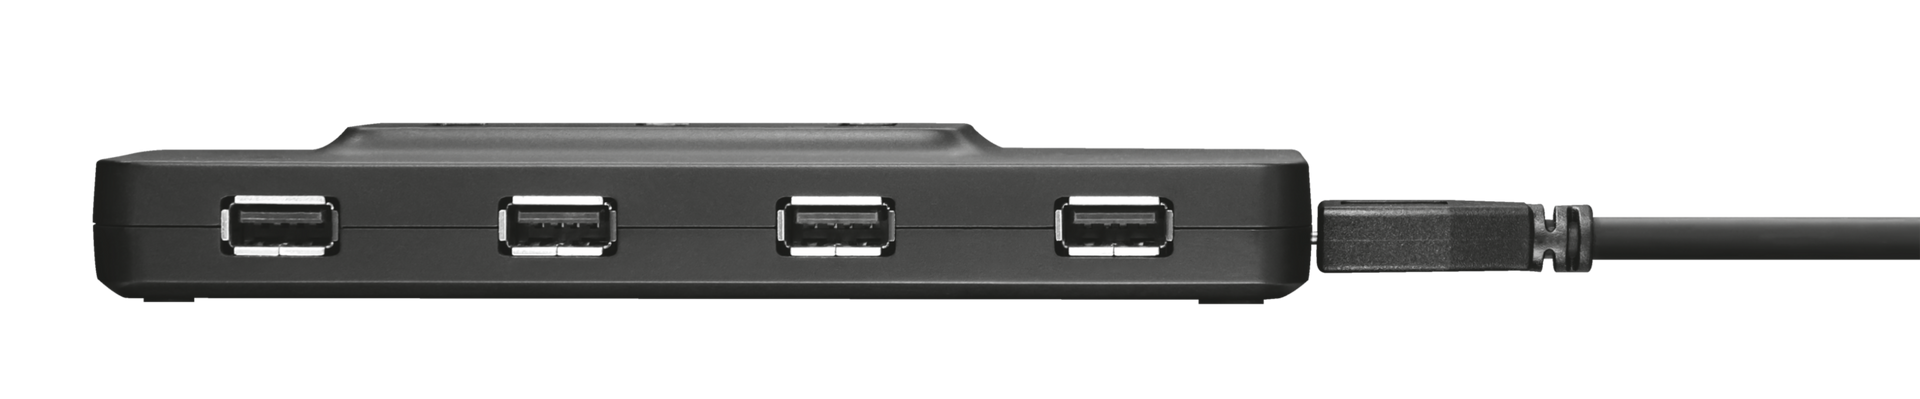 Oila 7 Port USB3.1 Hub-Side